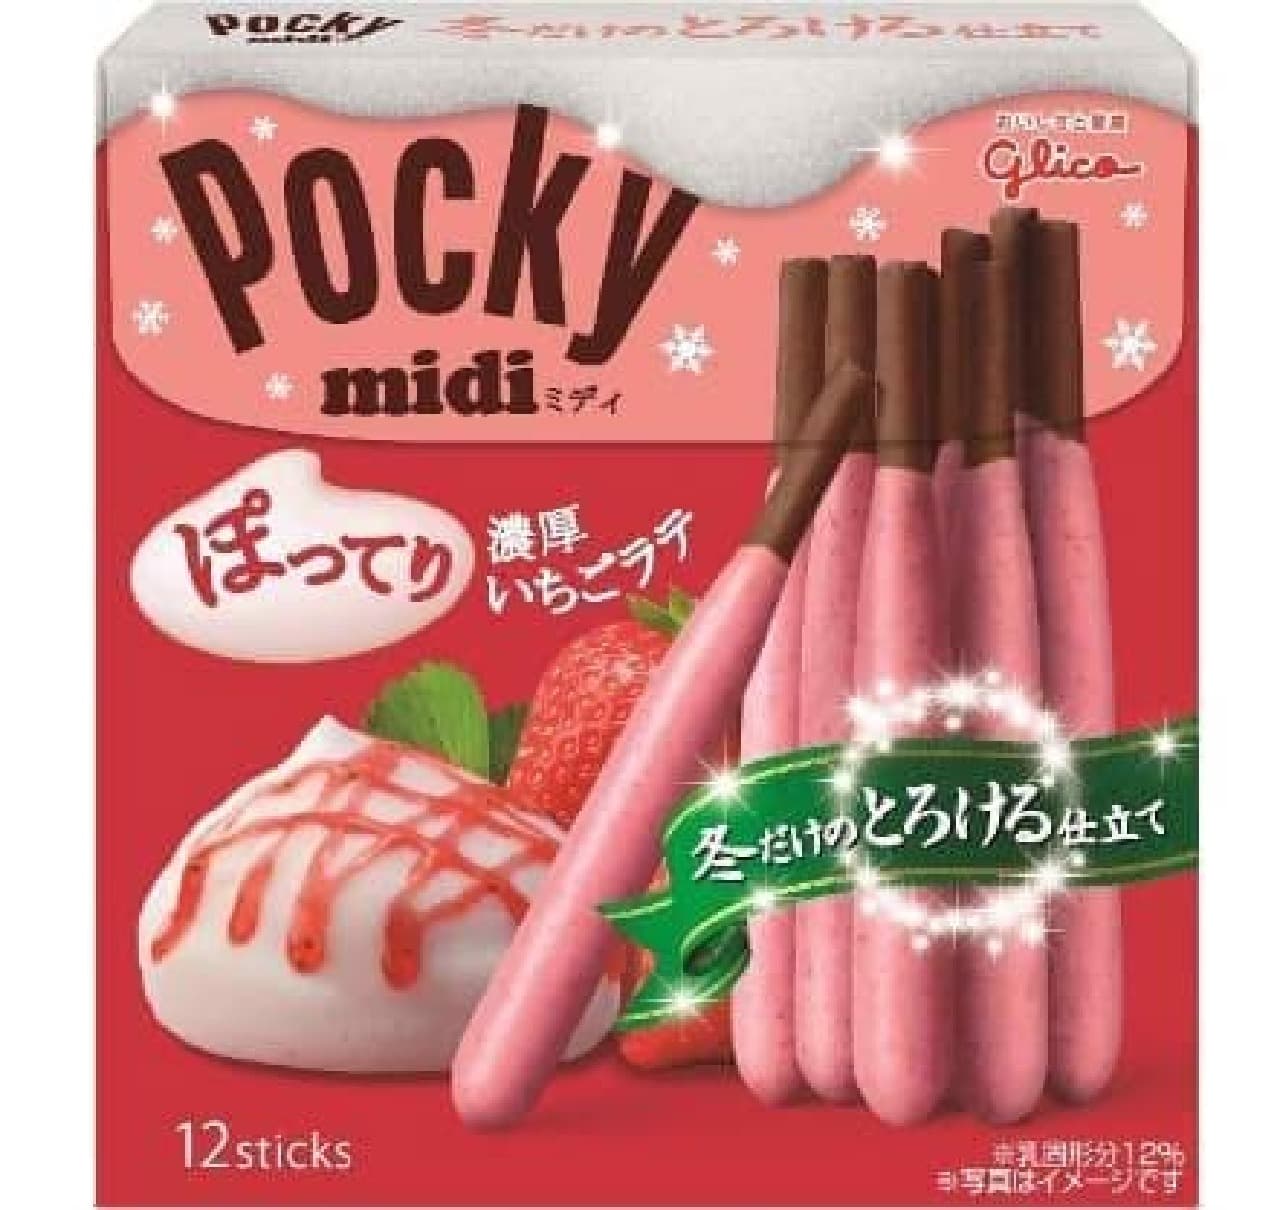 A new flavor for "Pocky Midi" with plenty of chocolate!